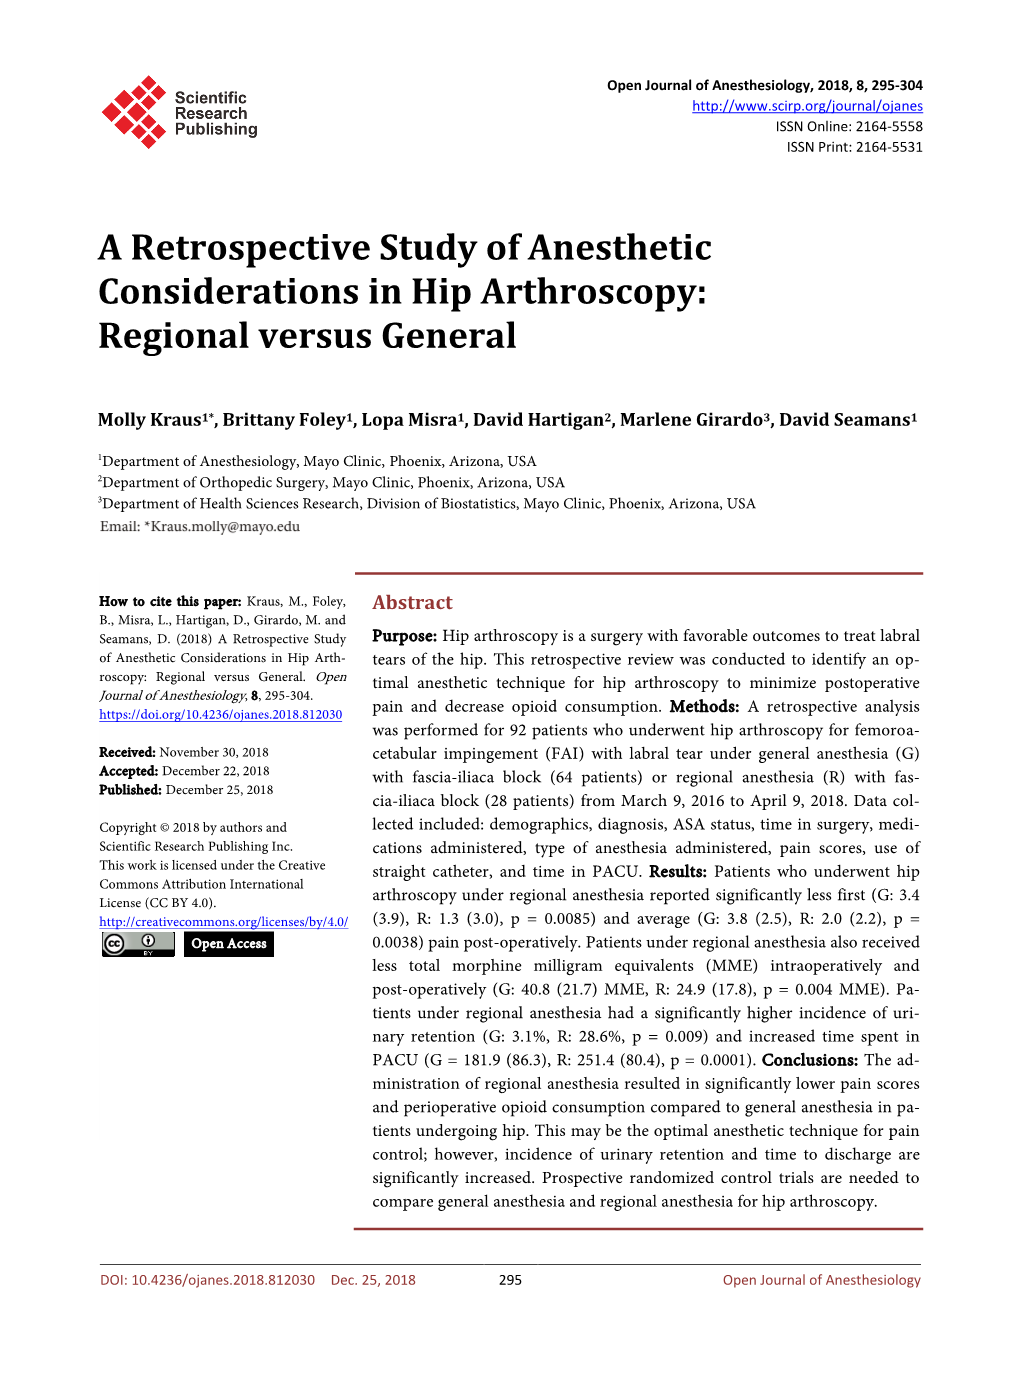 A Retrospective Study of Anesthetic Considerations in Hip Arthroscopy: Regional Versus General